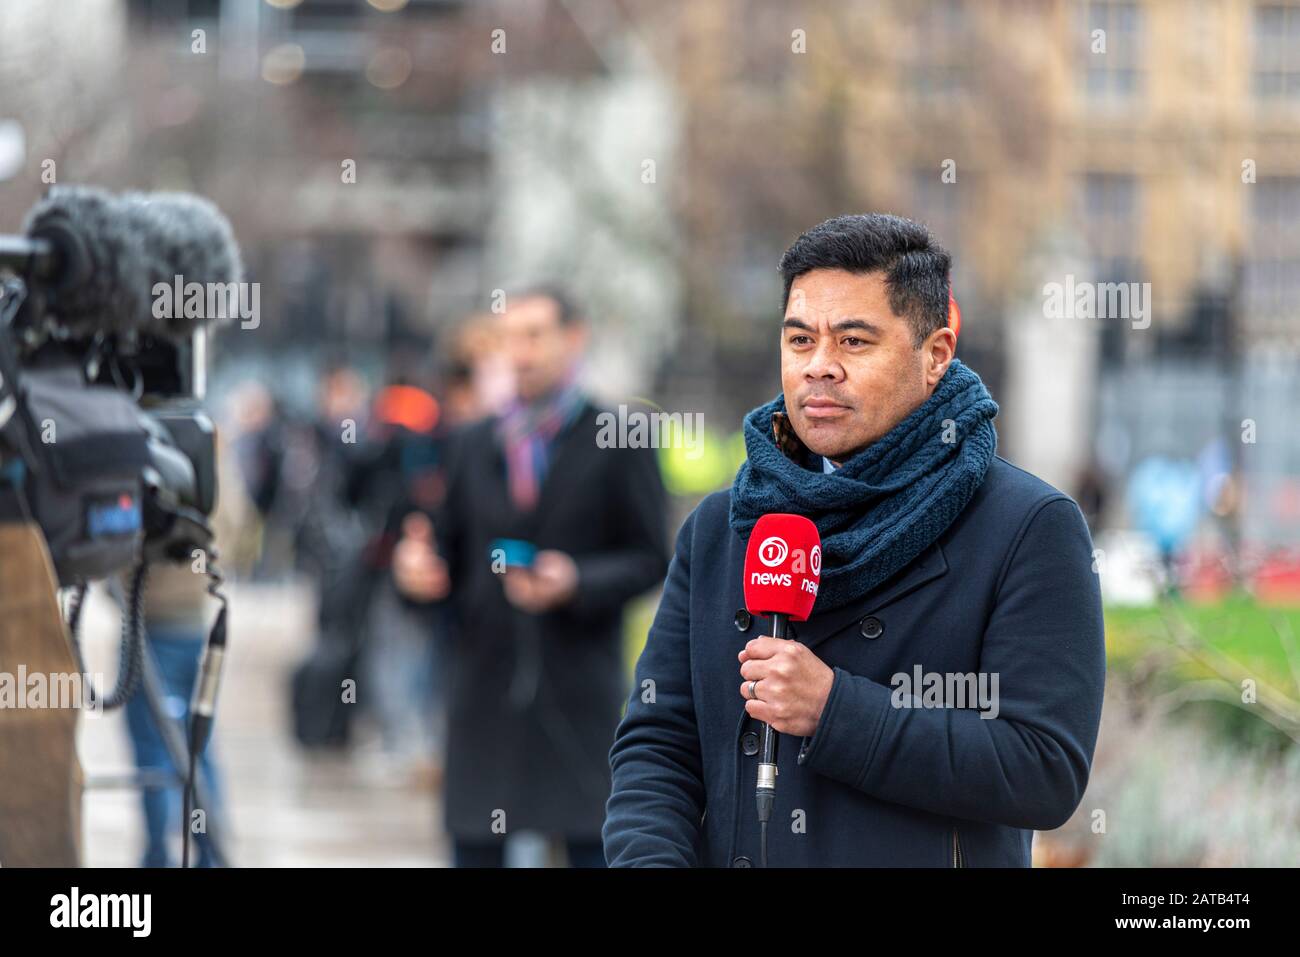 Daniel Faitaua of 1 News NZ. TV news presenter outside Parliament on Brexit Day, 31 January 2020, London, UK. Worldwide coverage. 1 News New Zealand Stock Photo